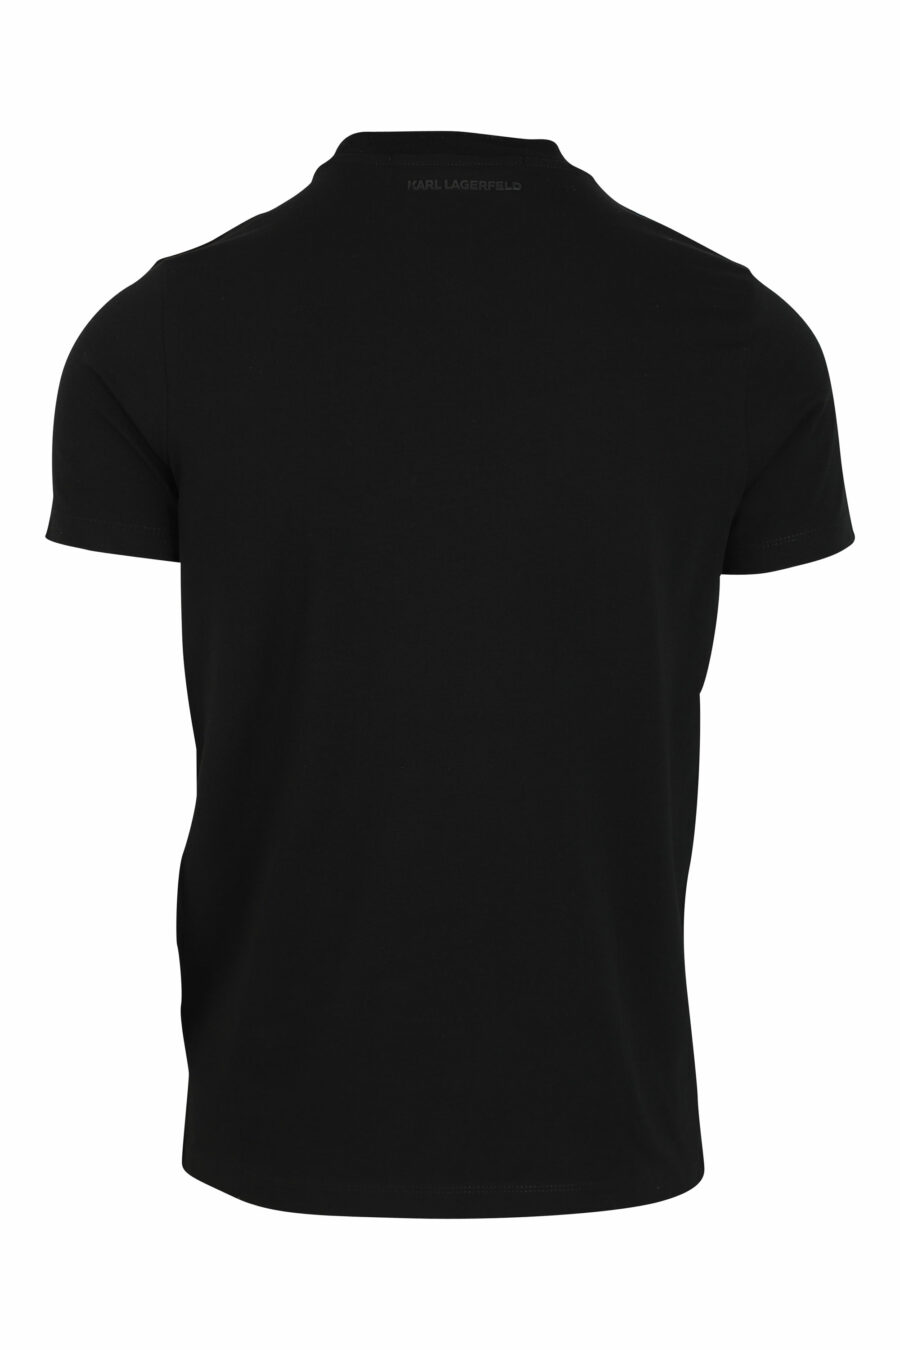 T-shirt noir avec maxilogo en silhouette bleue - 4062226292504 2